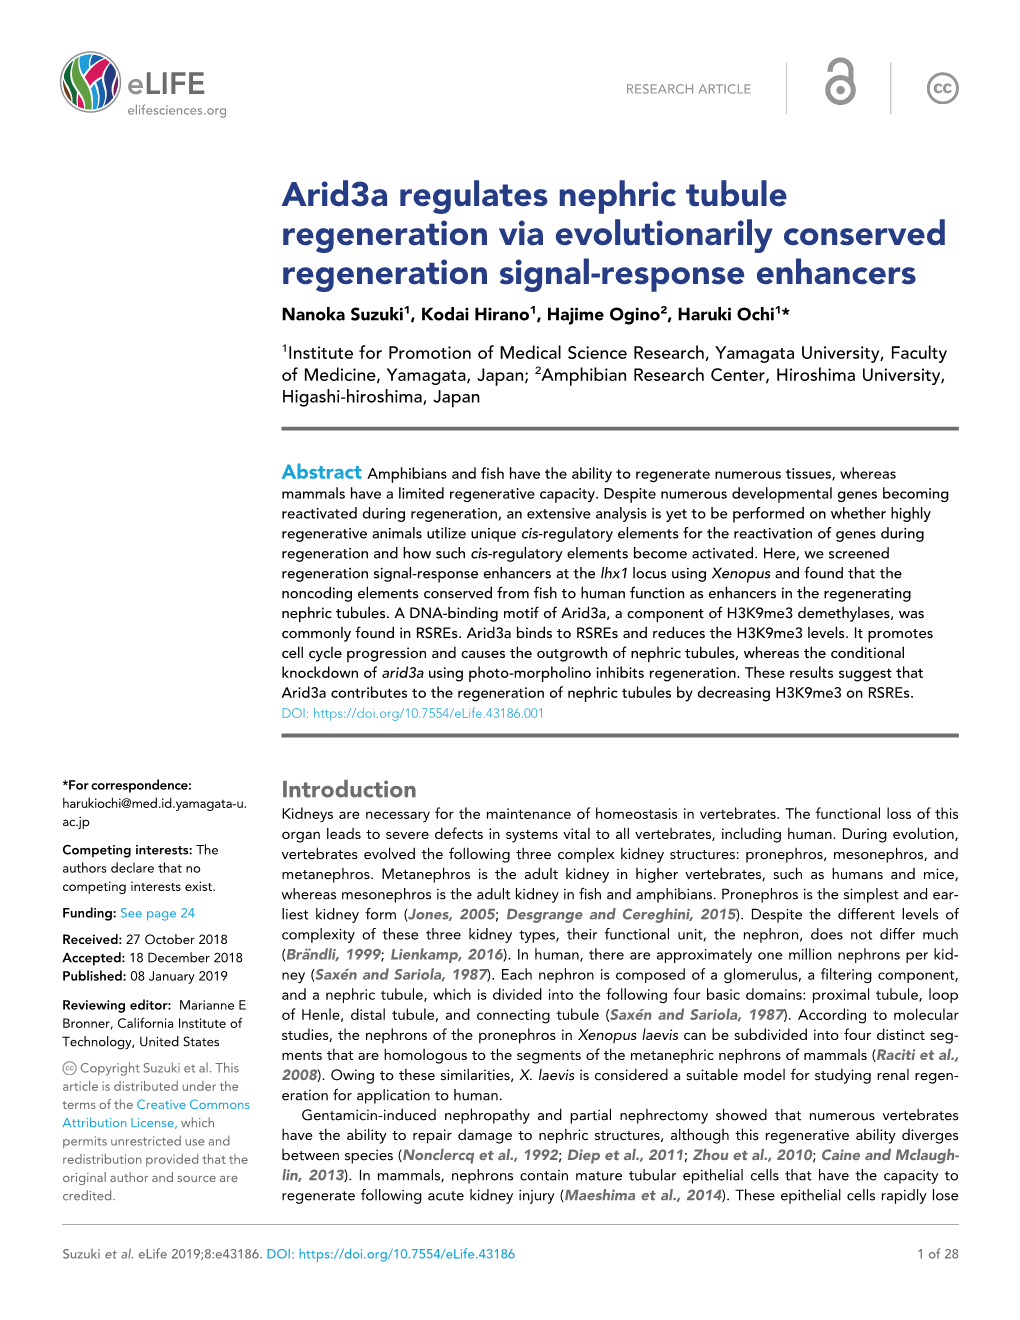 Arid3a Regulates Nephric Tubule Regeneration Via Evolutionarily